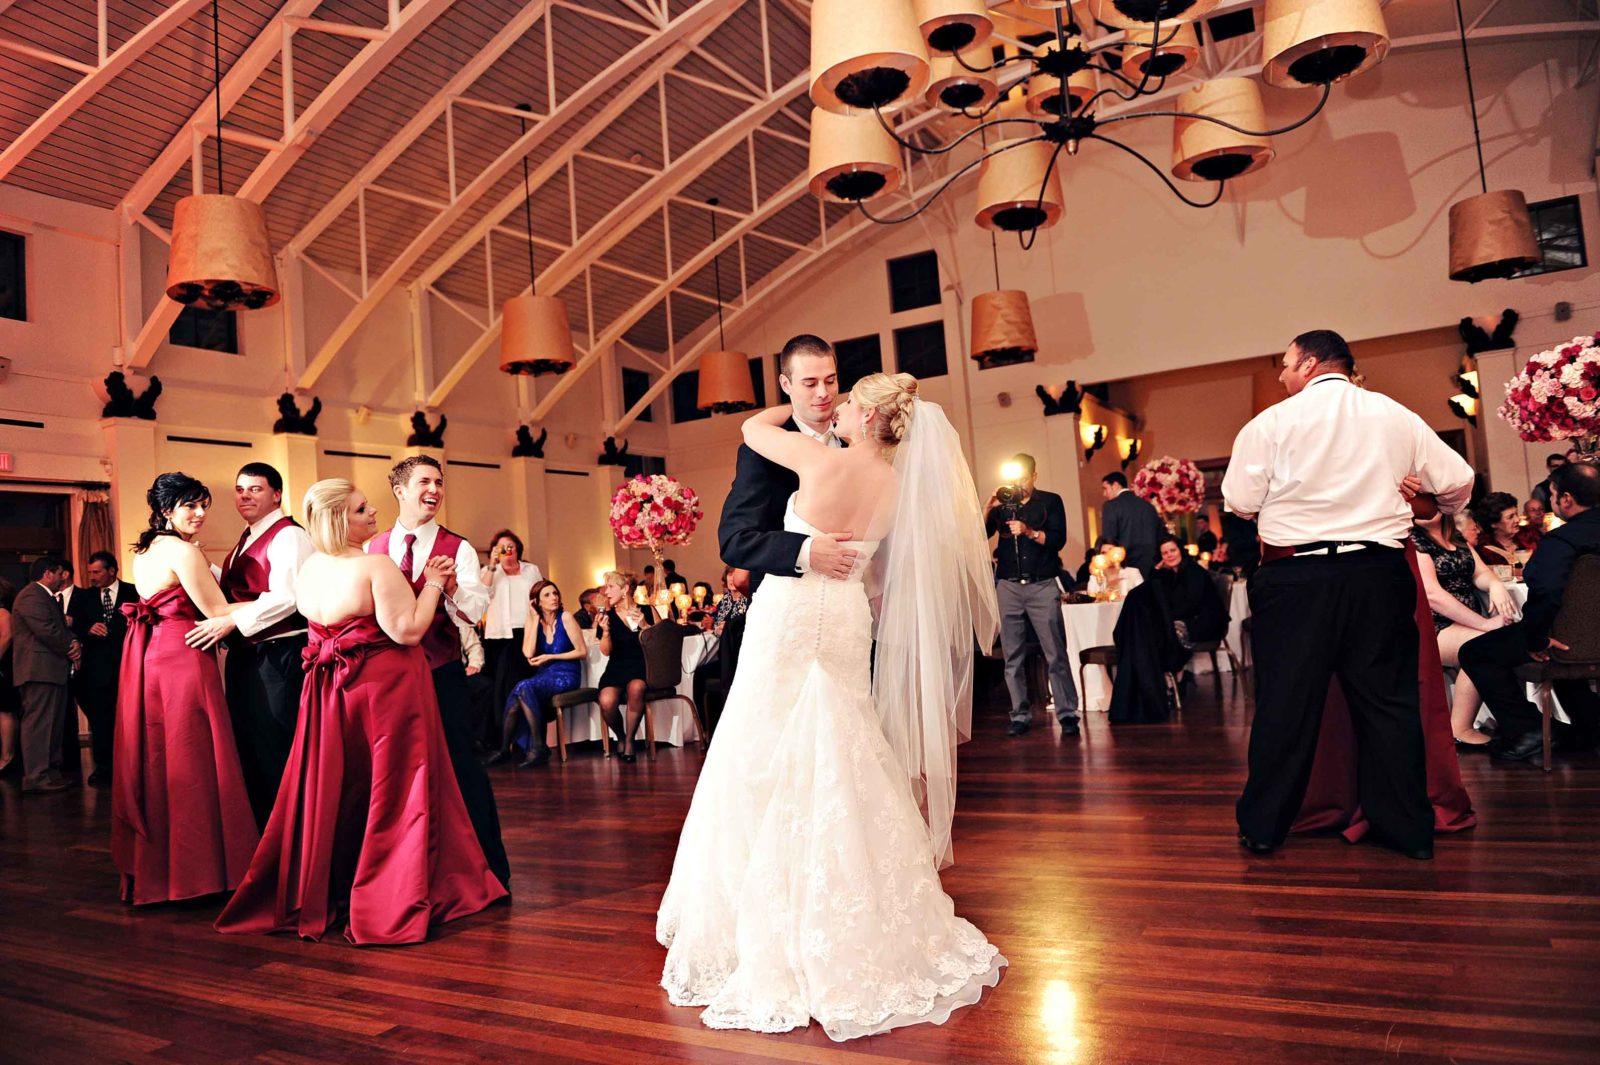 Bridal Party dance at the Audubon Tea Room. Photo: Studio Tran